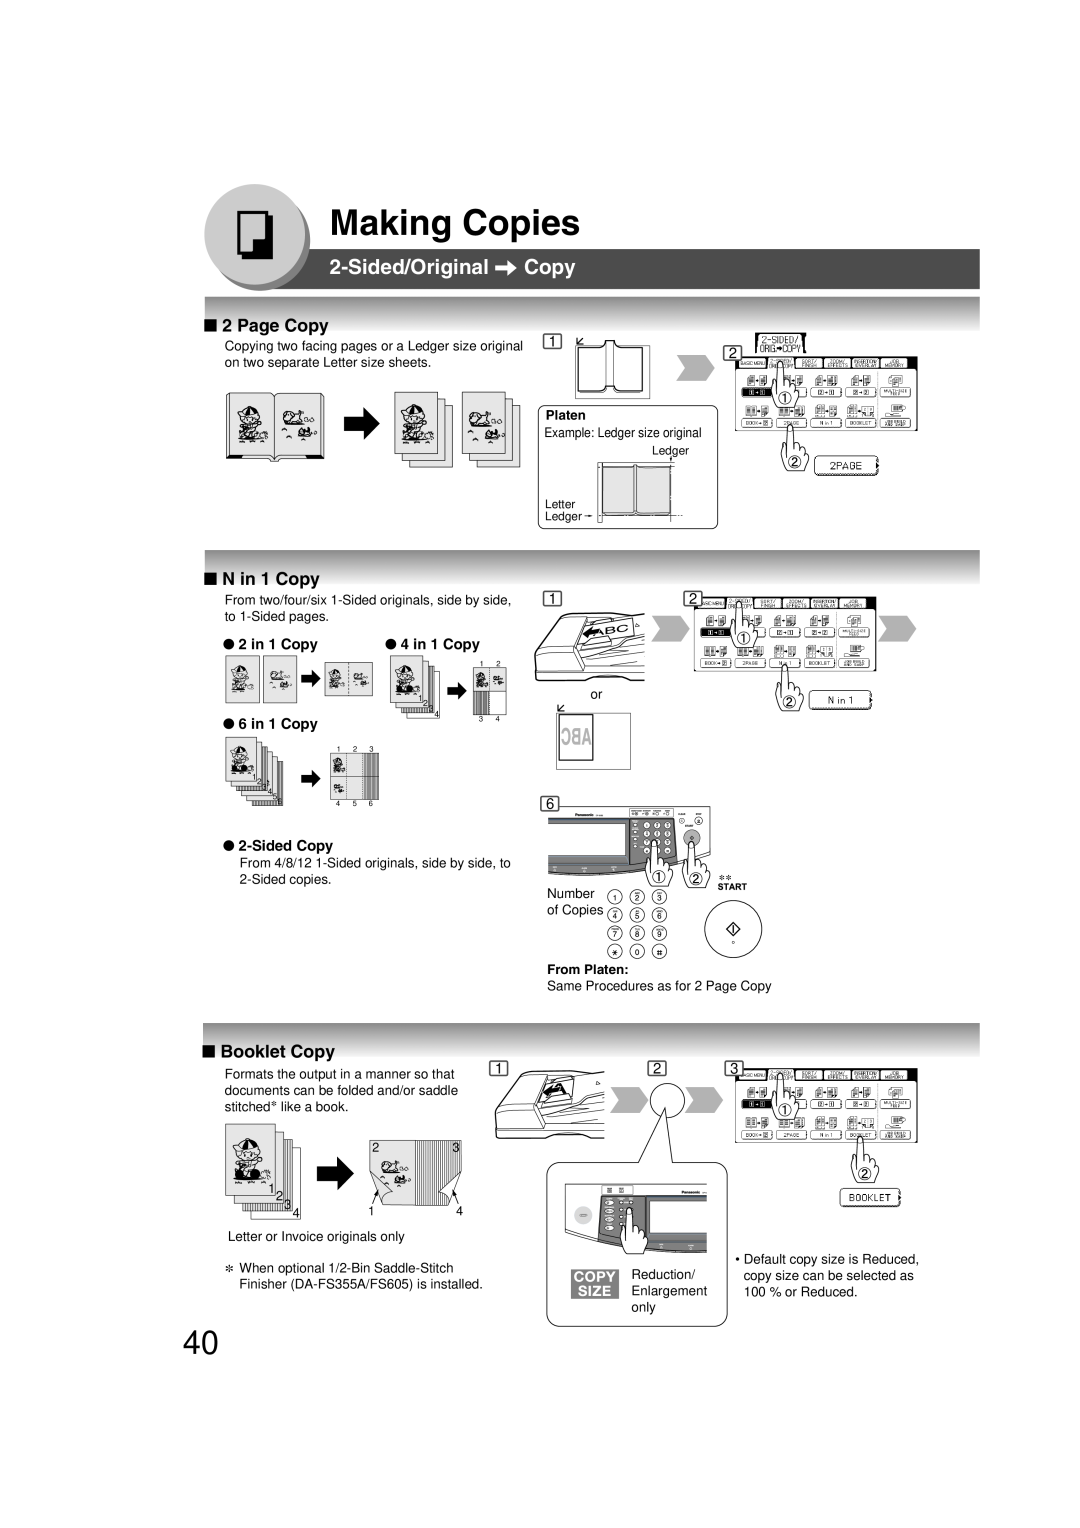 Panasonic 4520, 6020 Page Copy, N in 1 Copy, Booklet Copy, Making Copies, Sided/Original Copy, 2 in 1 Copy 6 in 1 Copy 